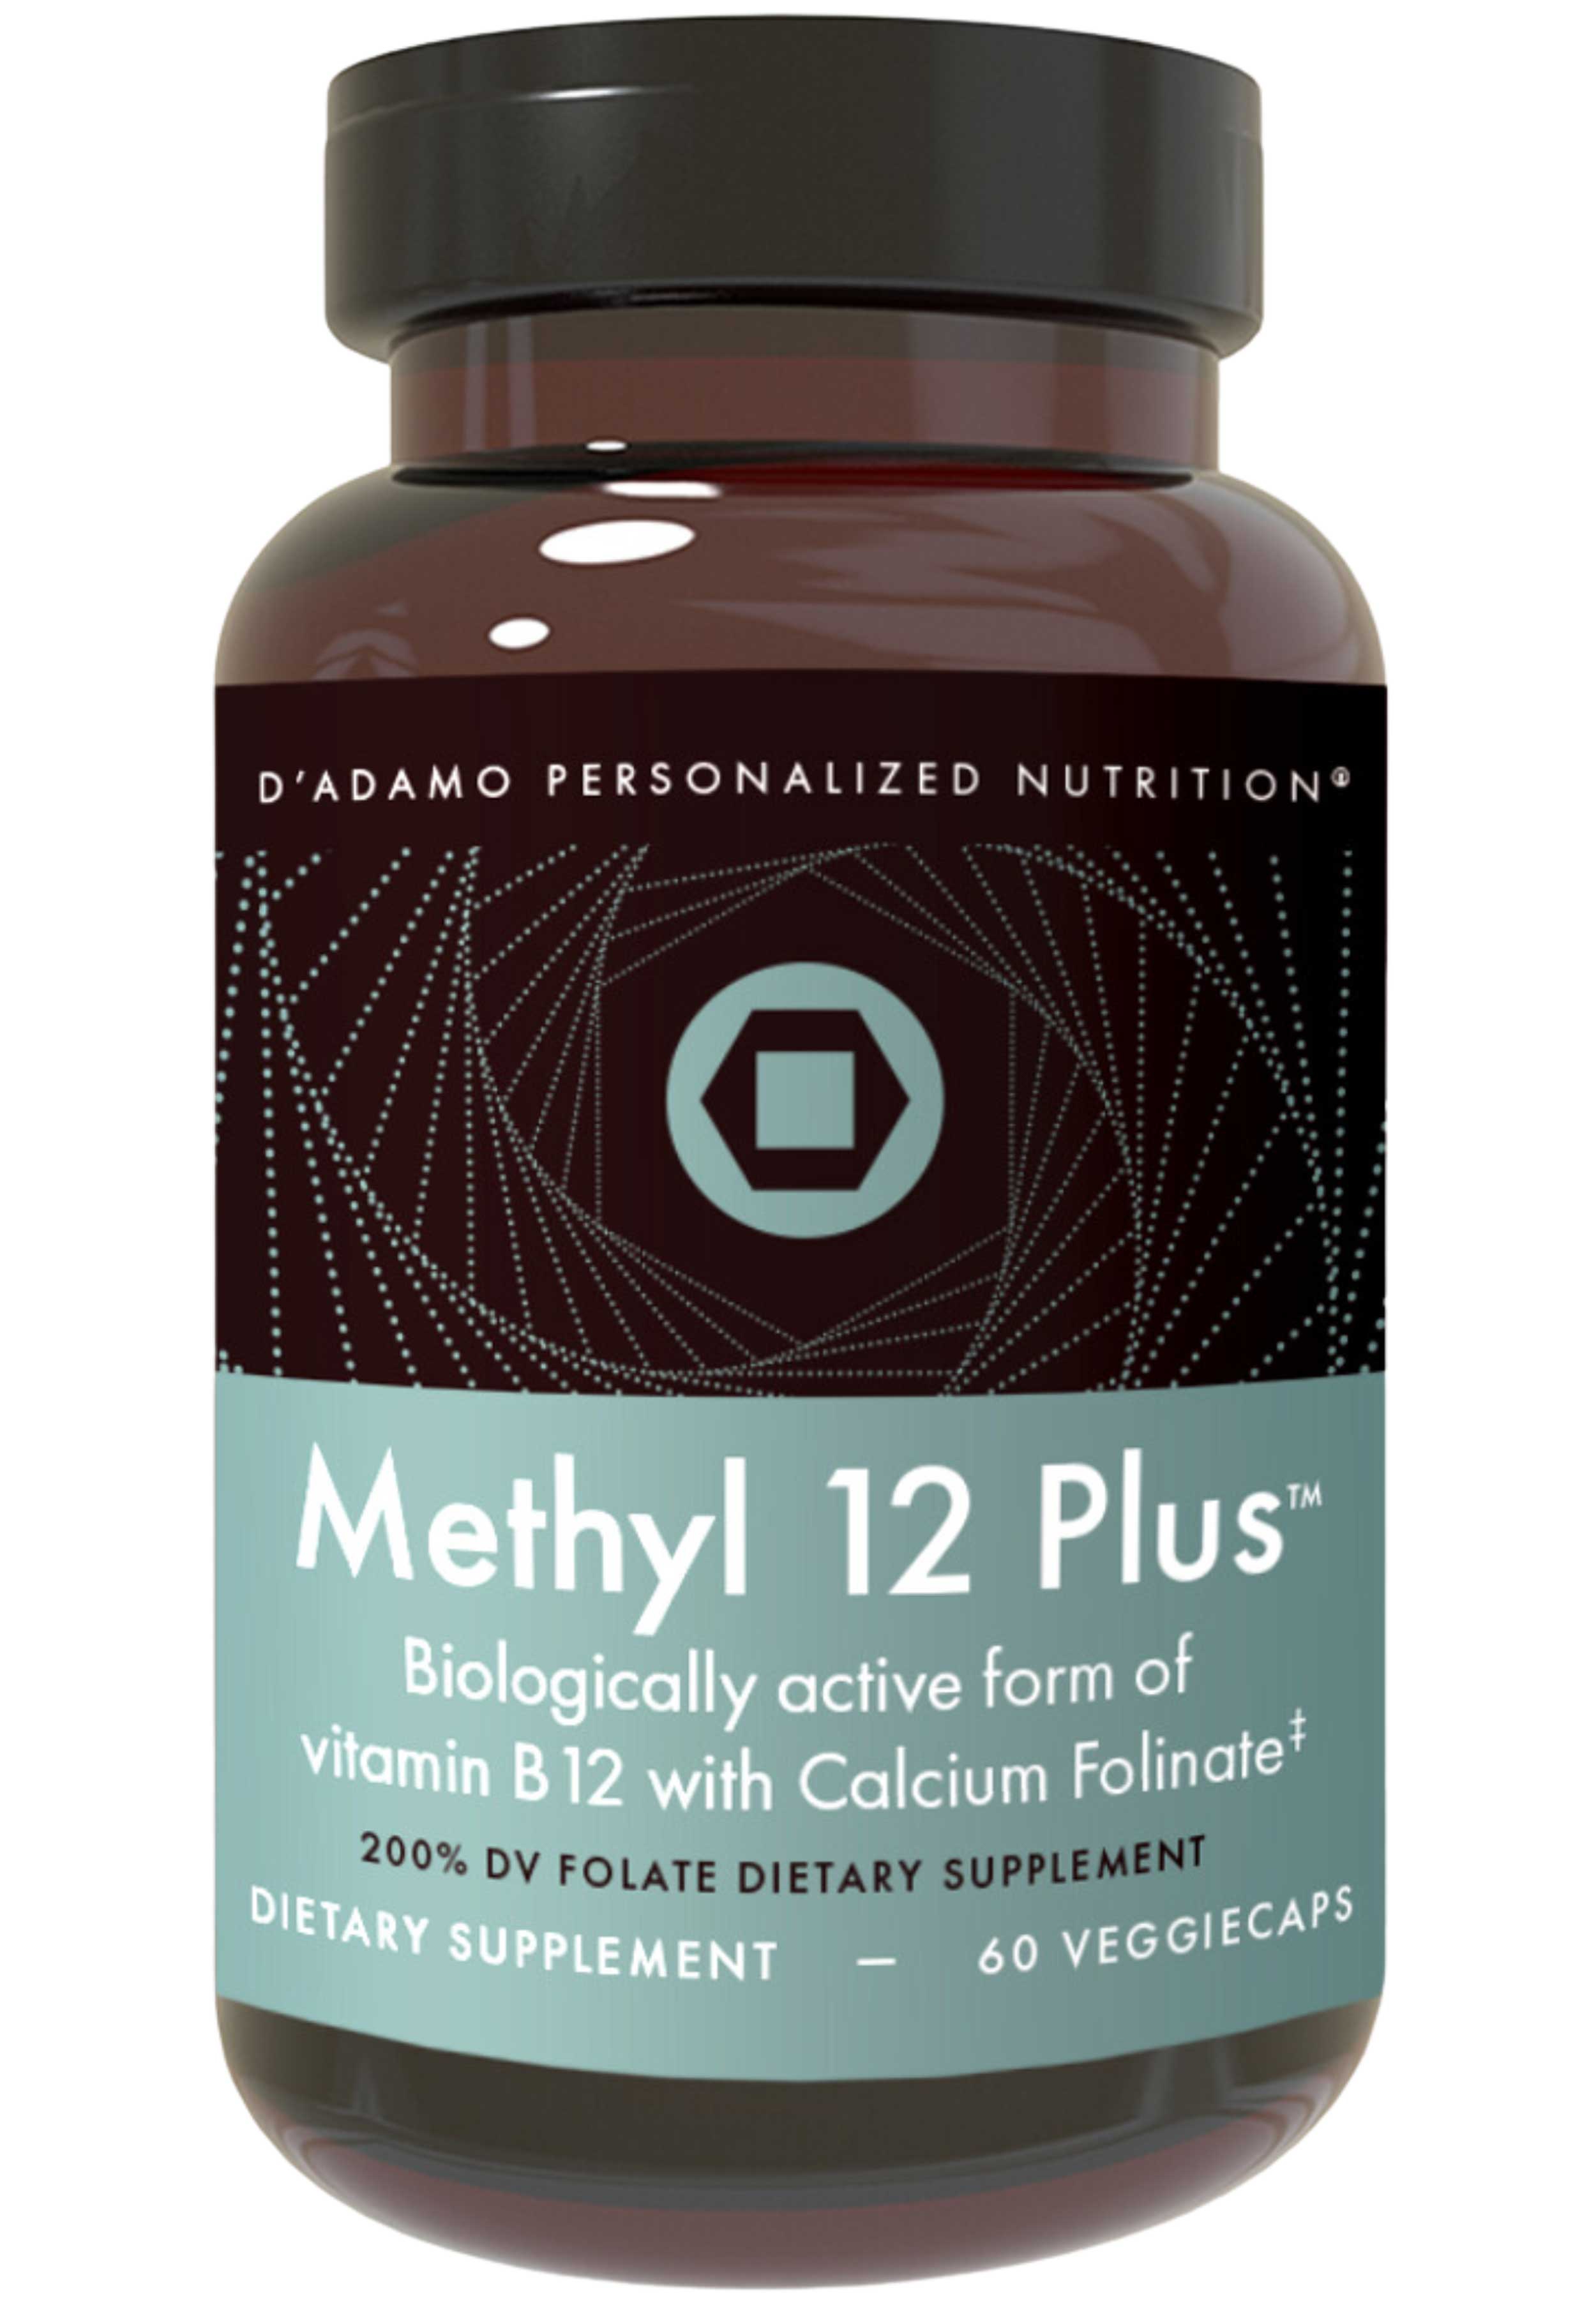 D'Adamo Personalized Nutrition Methyl 12 Plus